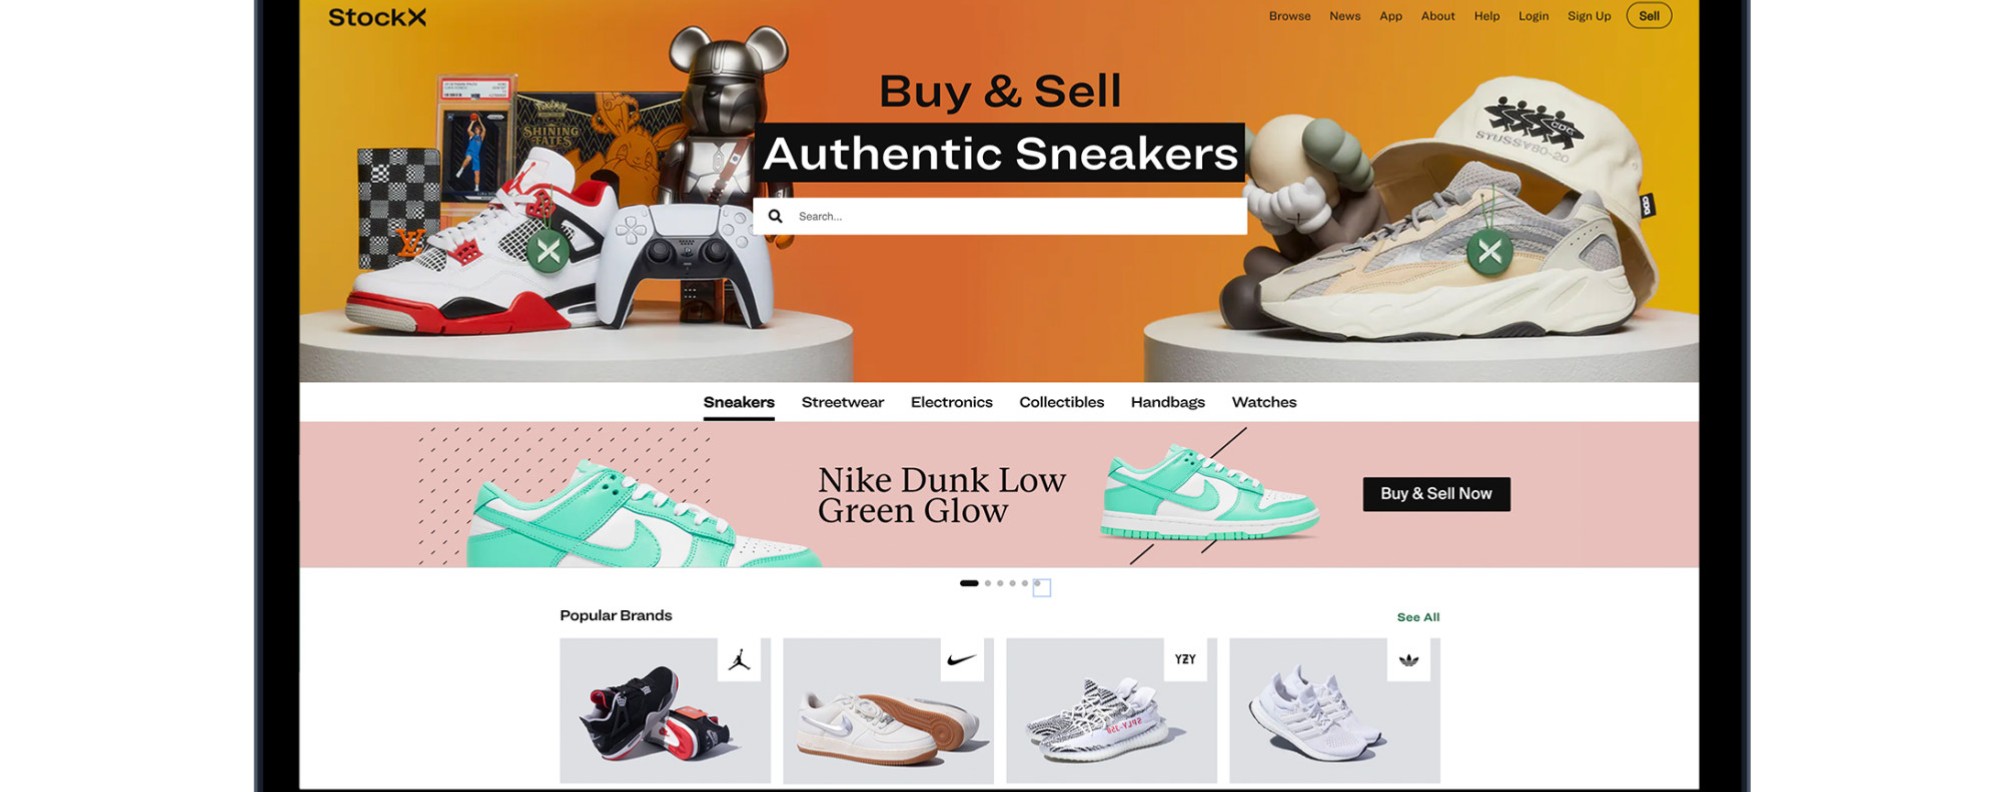 10 Designer Sneakers Under Retail - StockX News